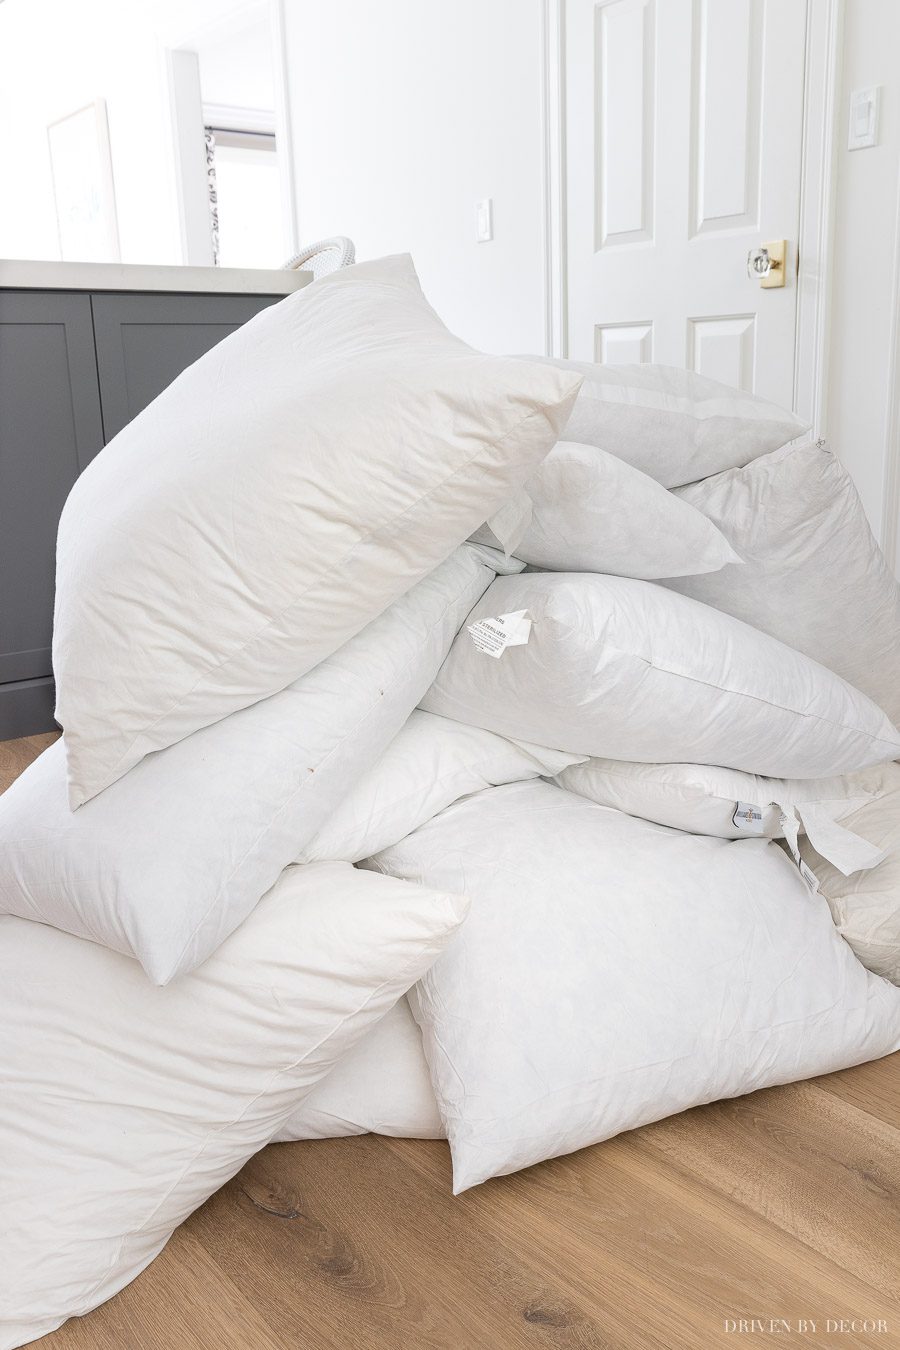 Throw Pillow Storage: How To Organize Your Pillow Stash! | Driven by Decor